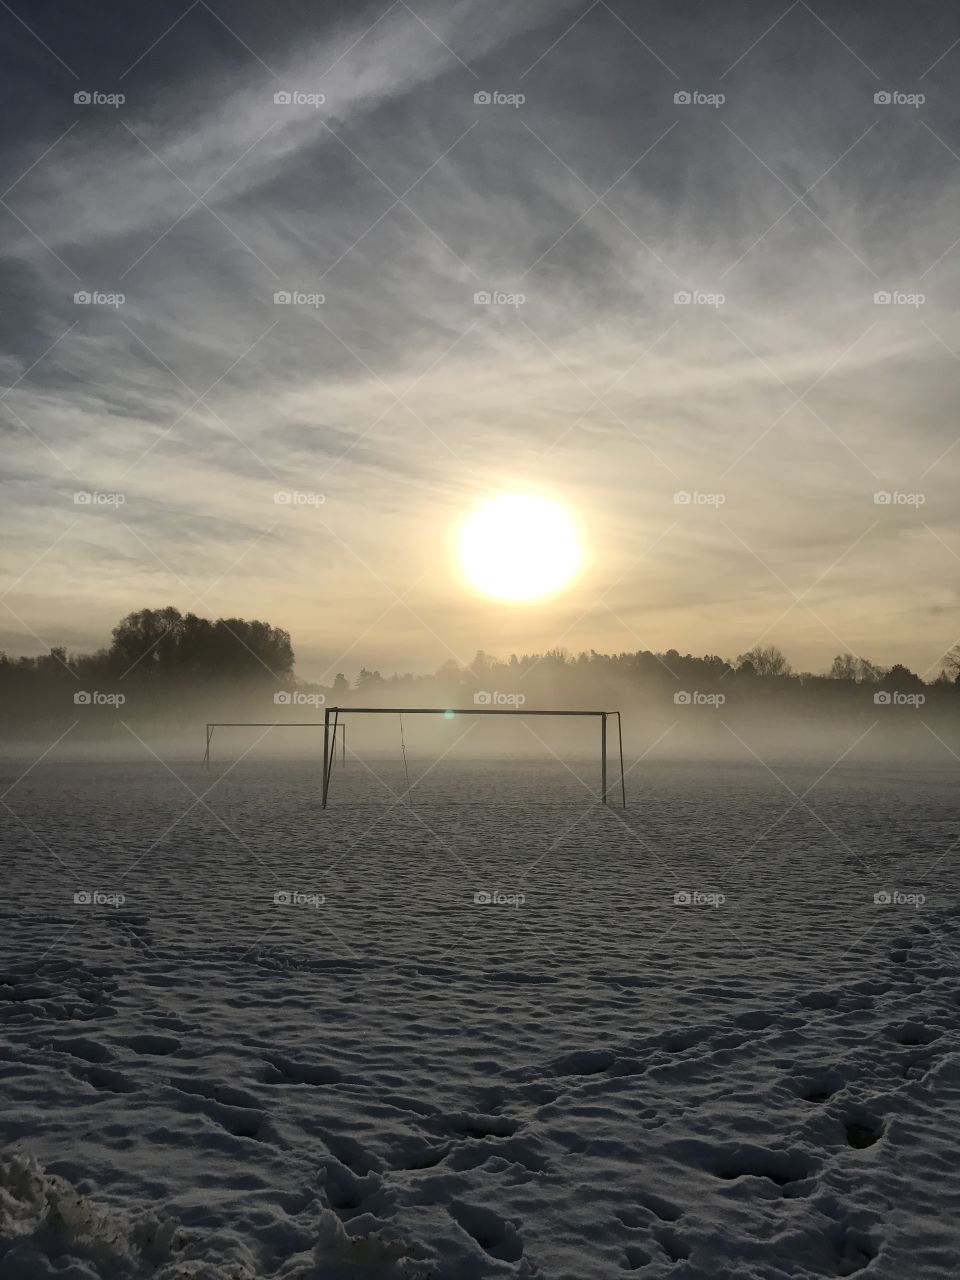 Football Swedish winter